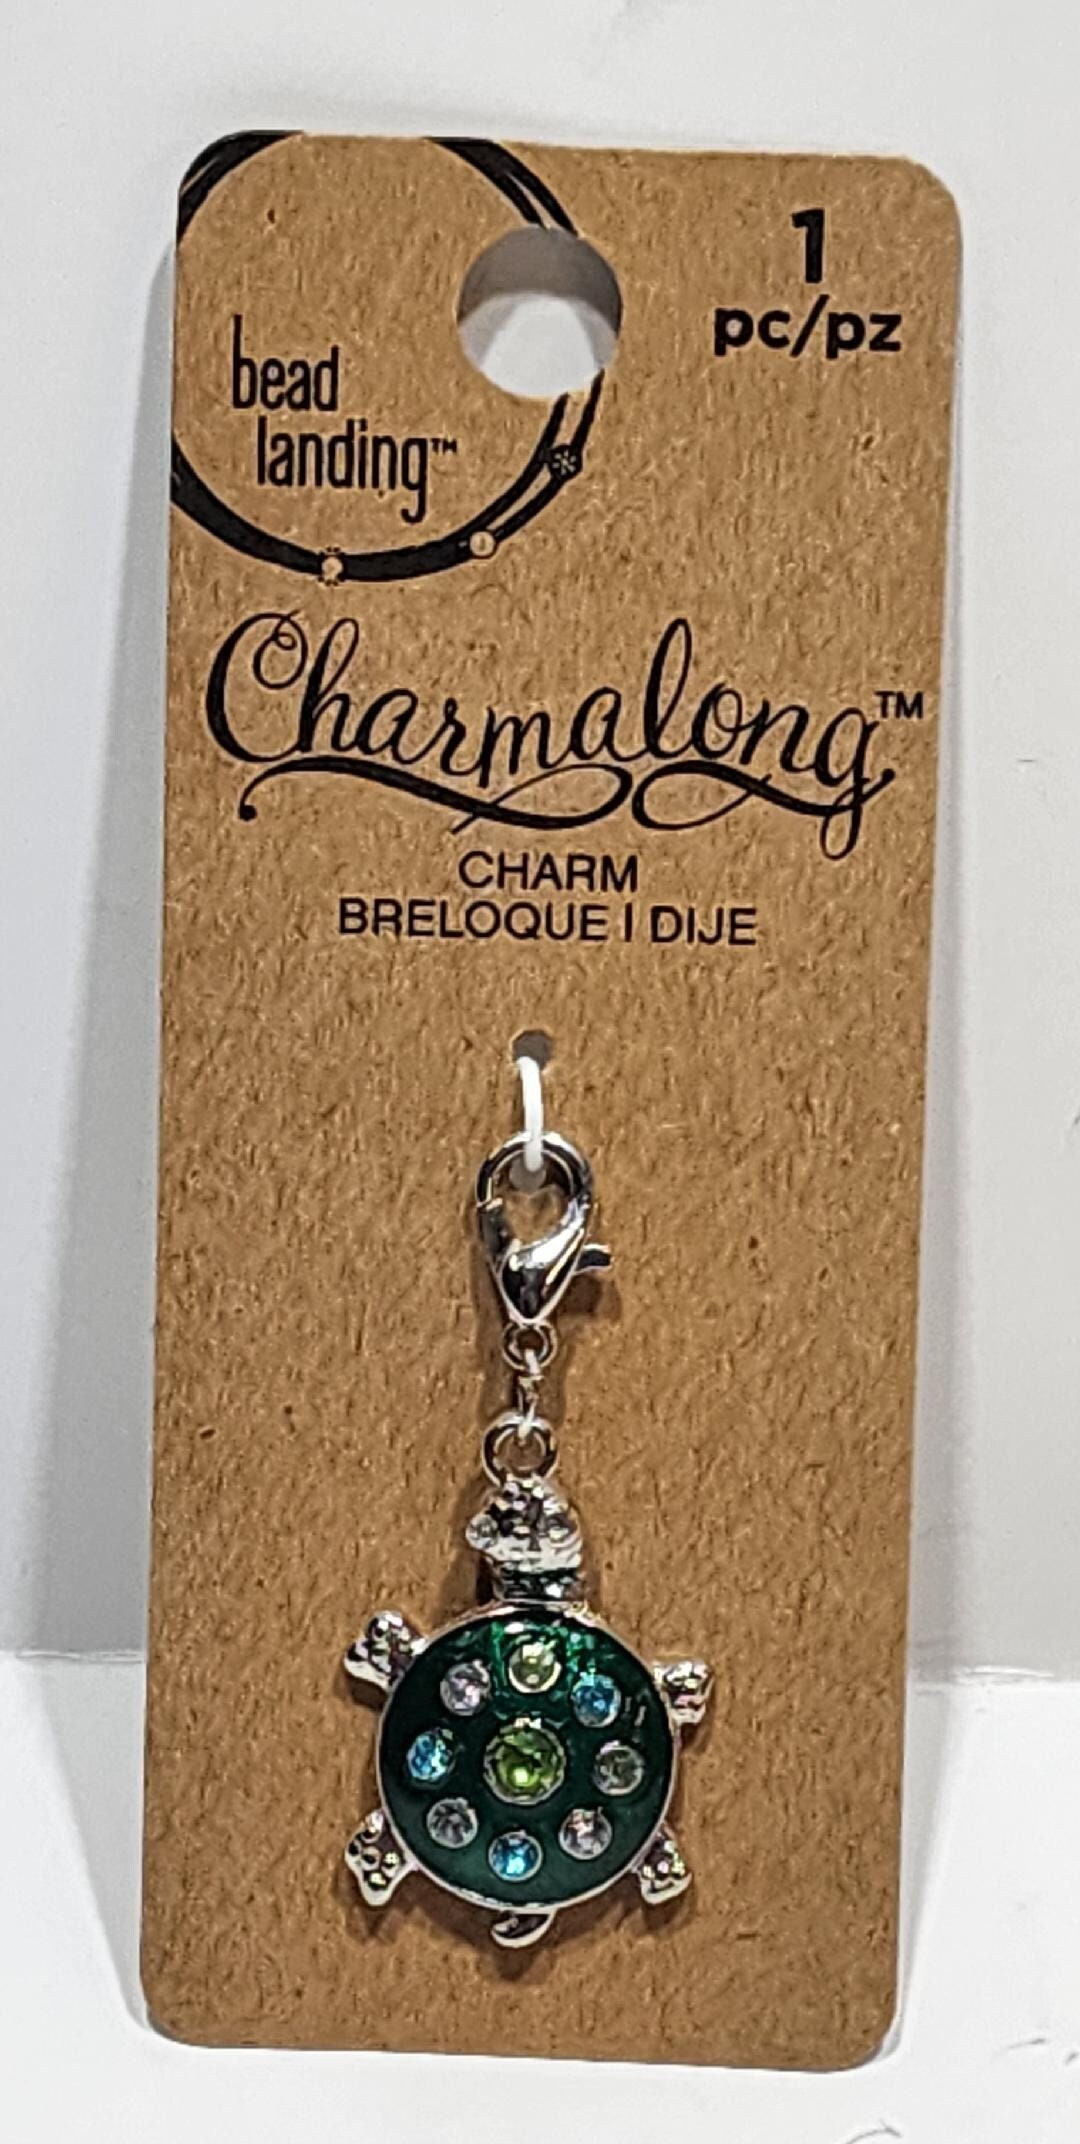 Bead Landing Charmalong Turtle Charm - Each